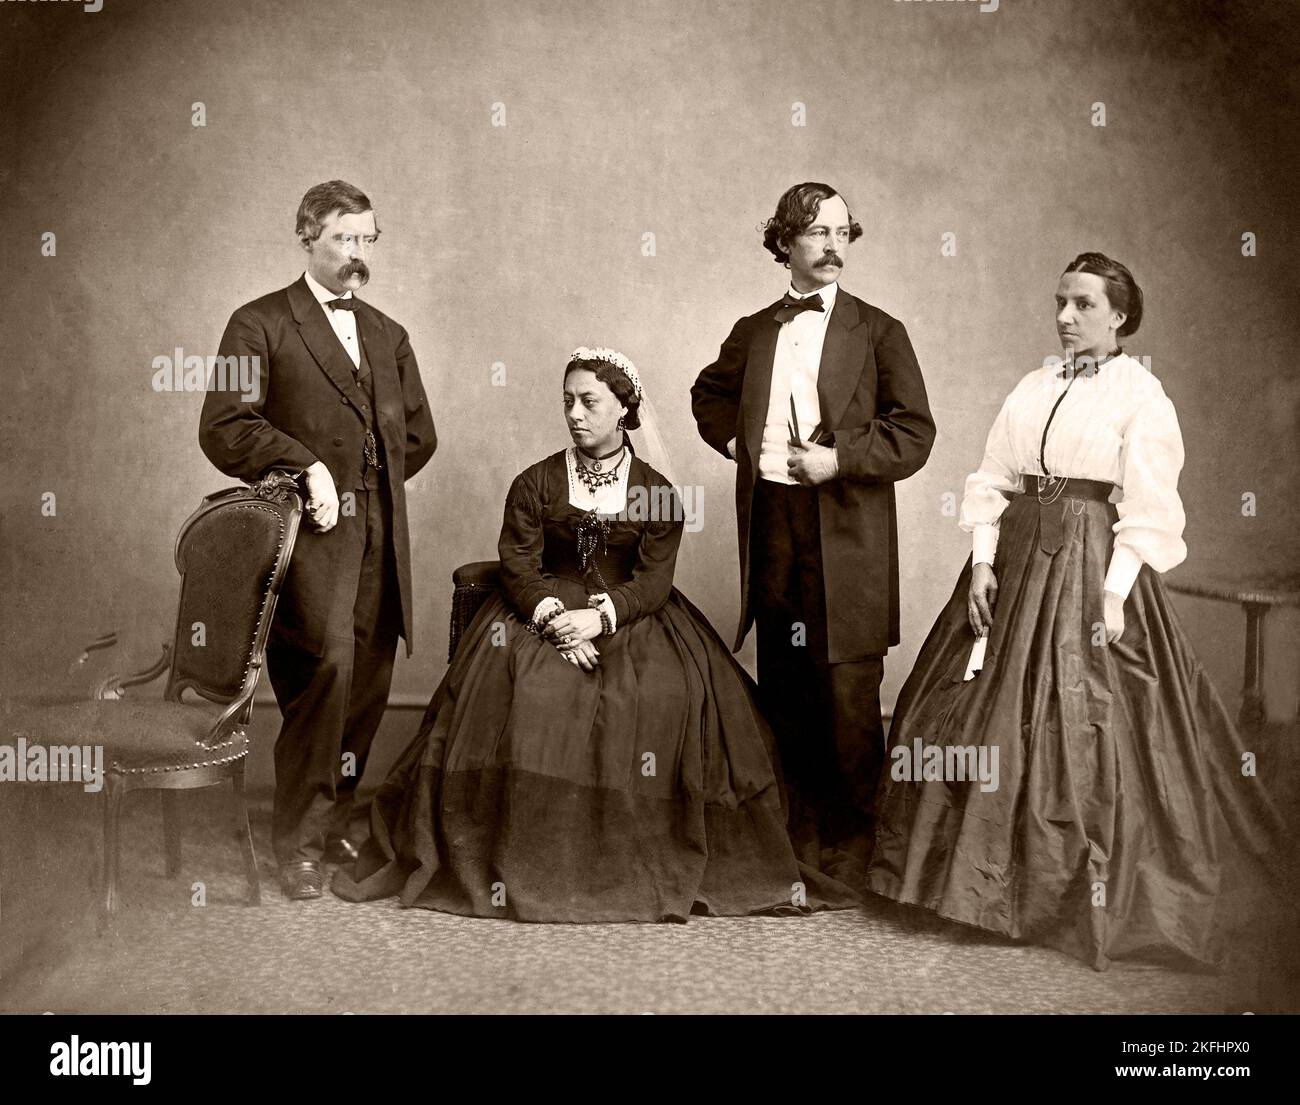 Queen Emma of Hawaii and her entourage - photo by Alexander Gardner in 1865 Stock Photo